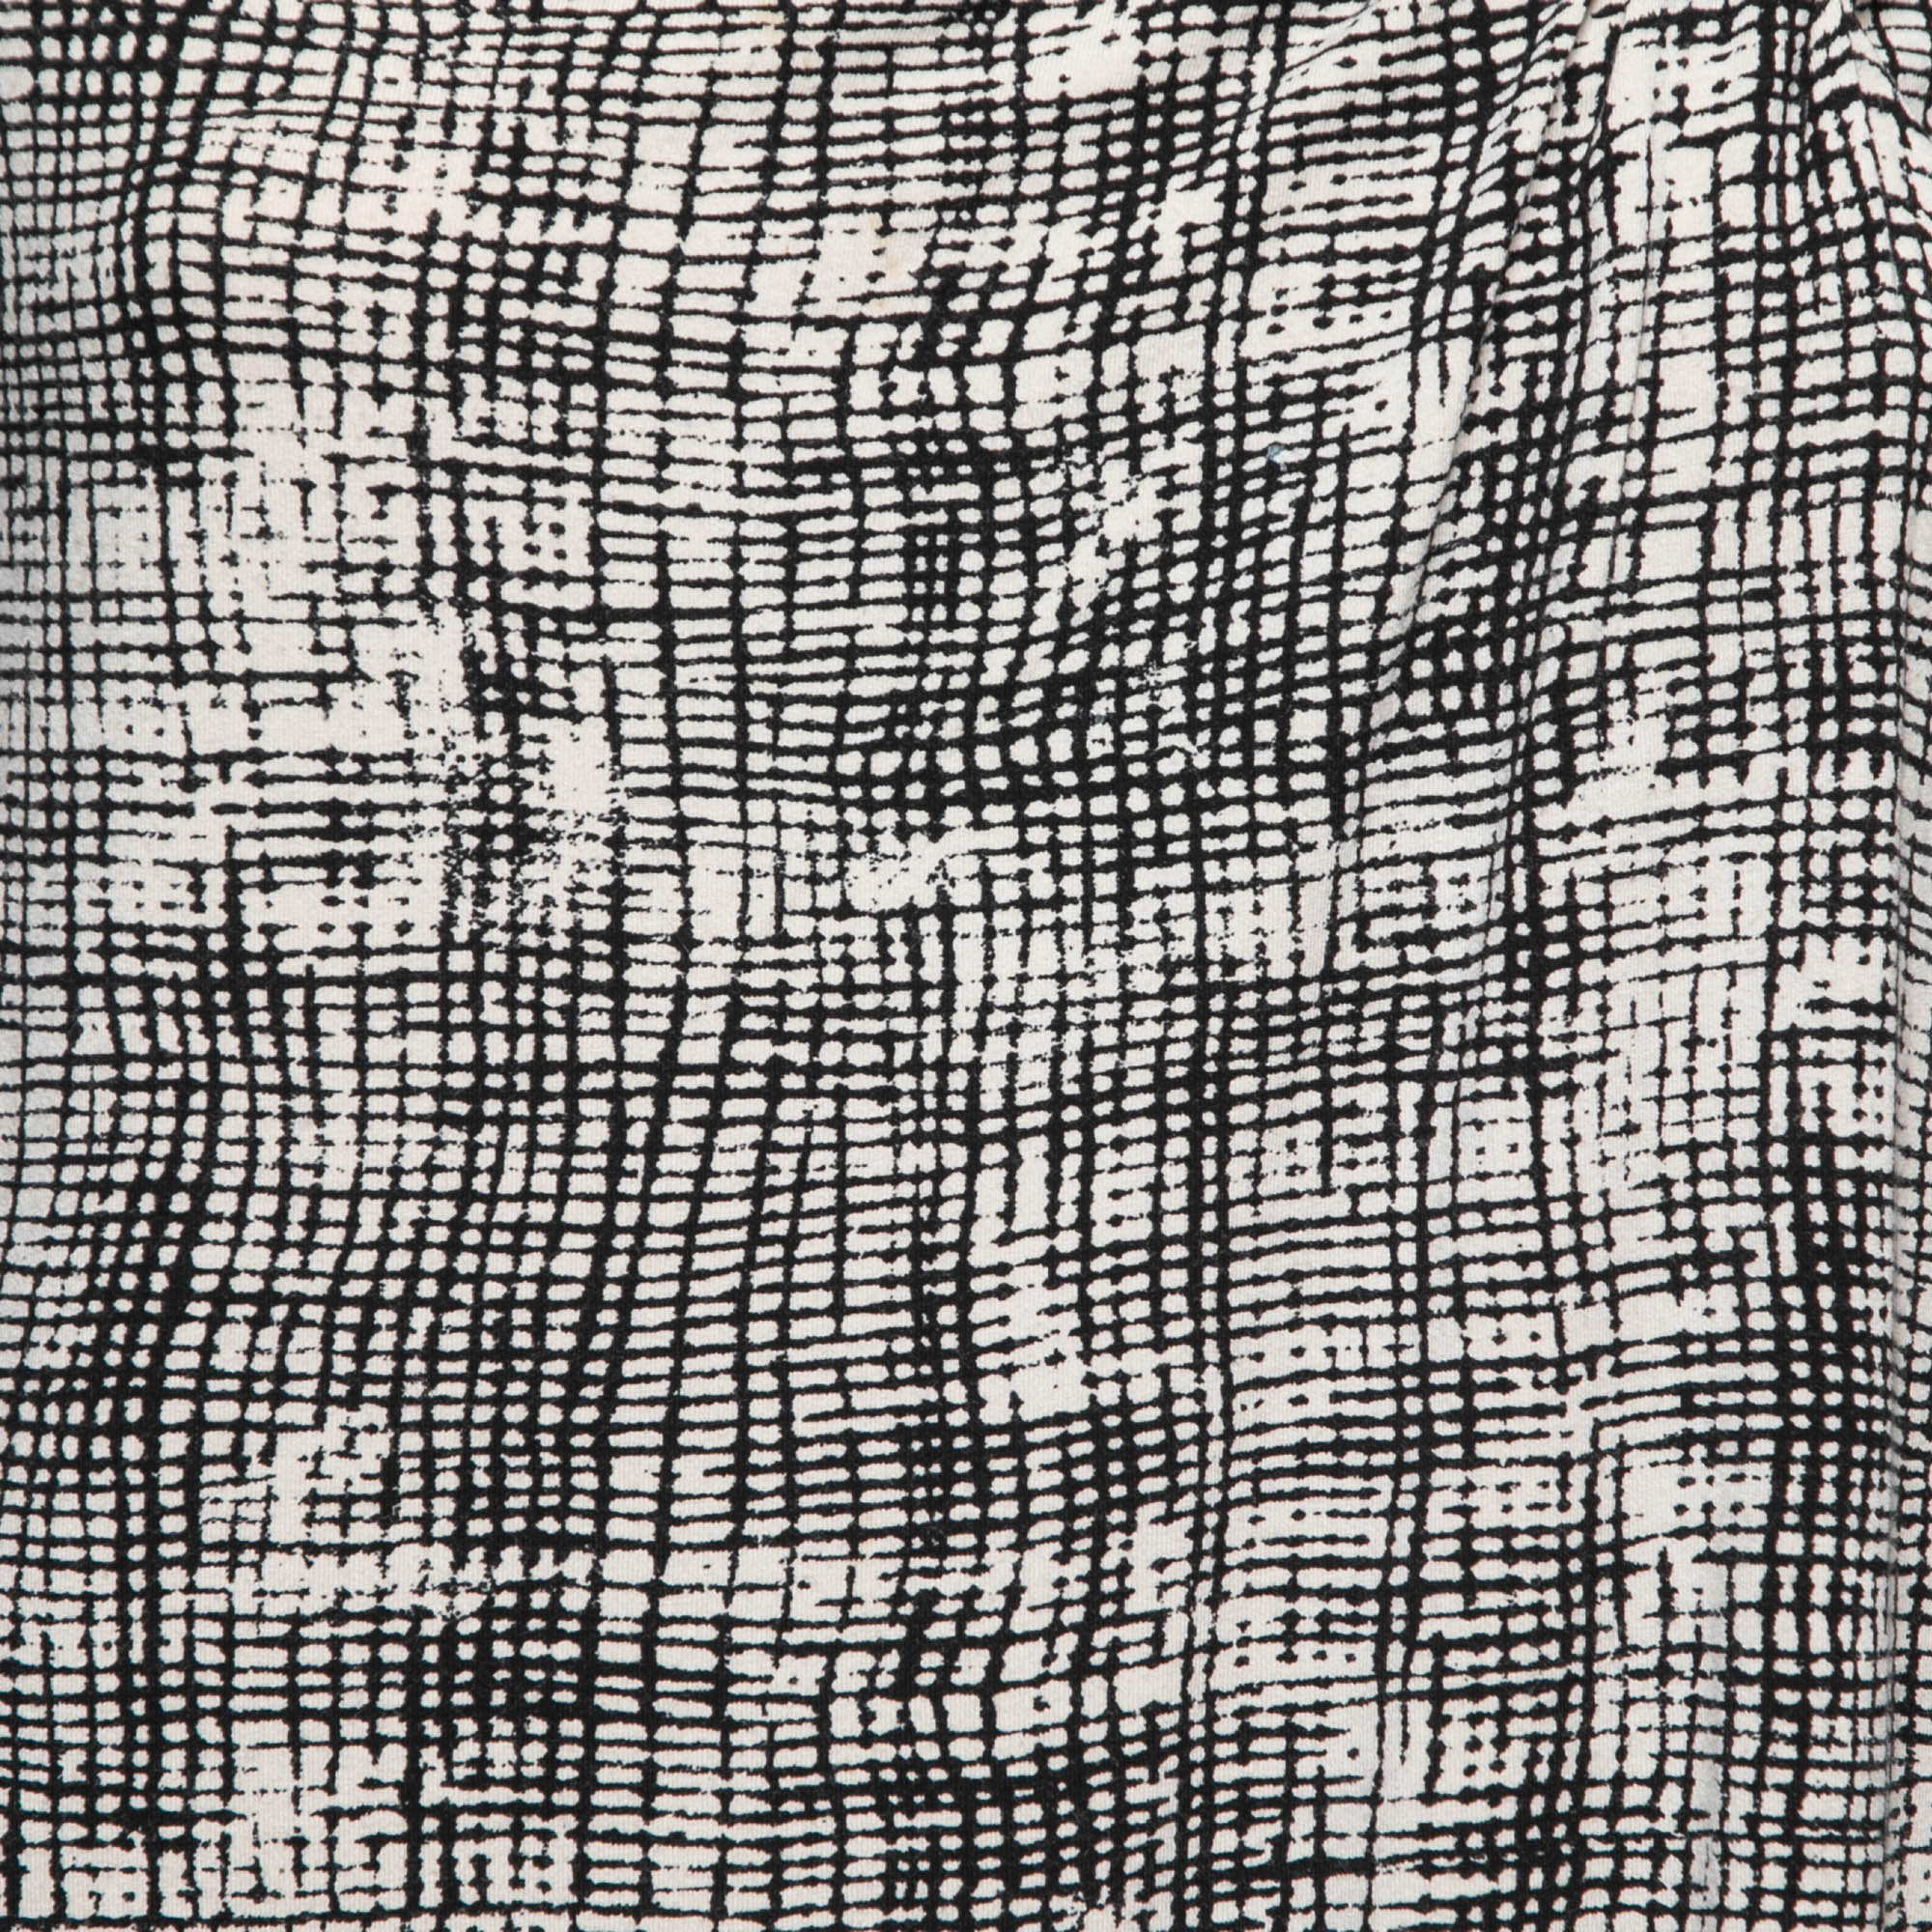 Weekend Max Mara Monochrome Printed Stretch Jersey Dress S